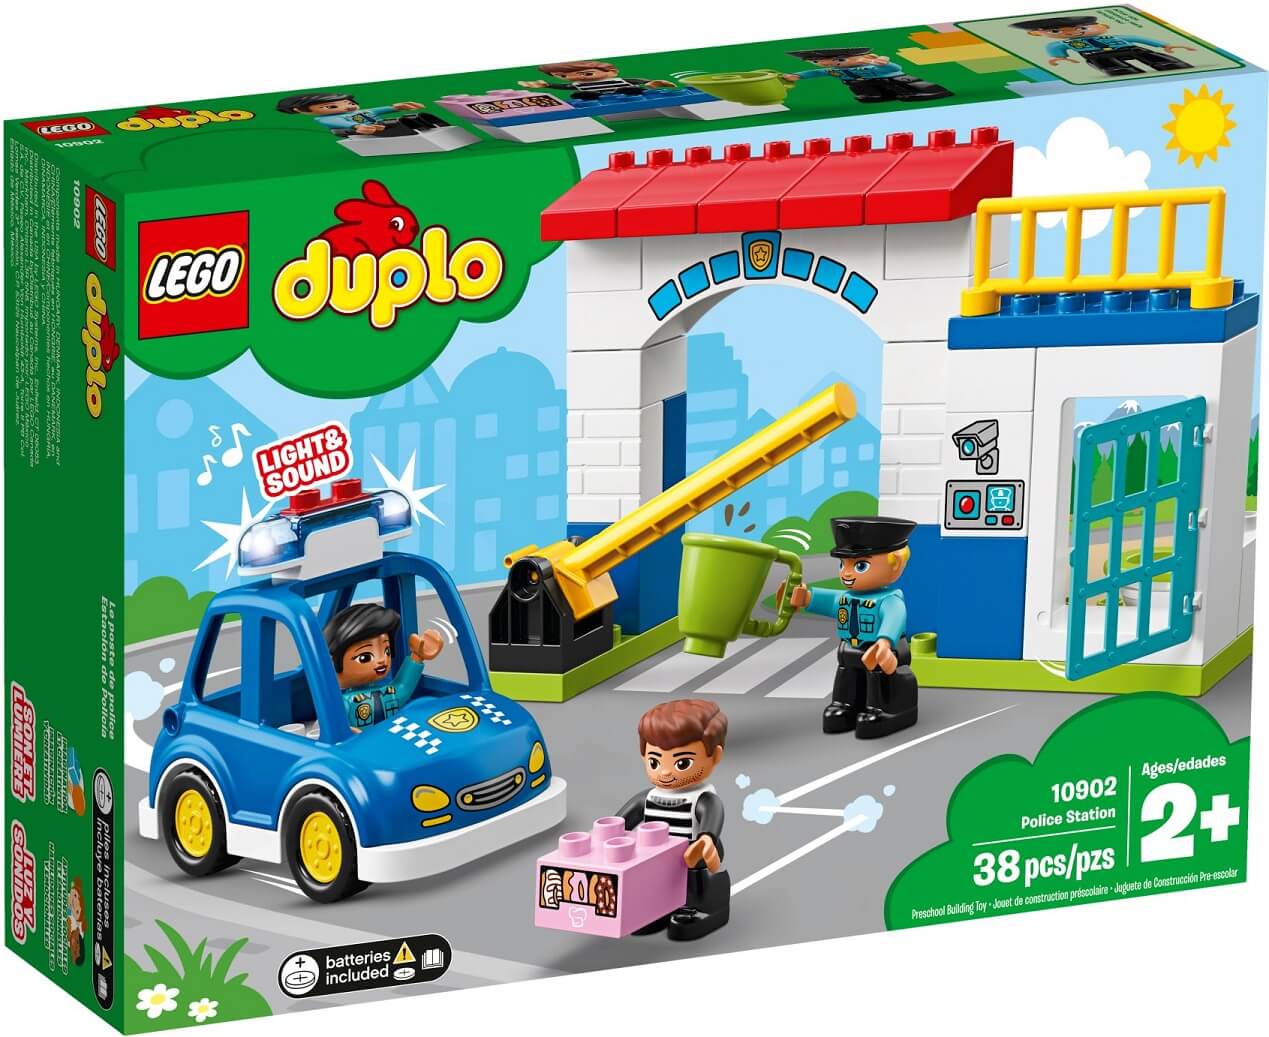 Comisaria de Policia Duplo ( Lego 10902 ) imagen d